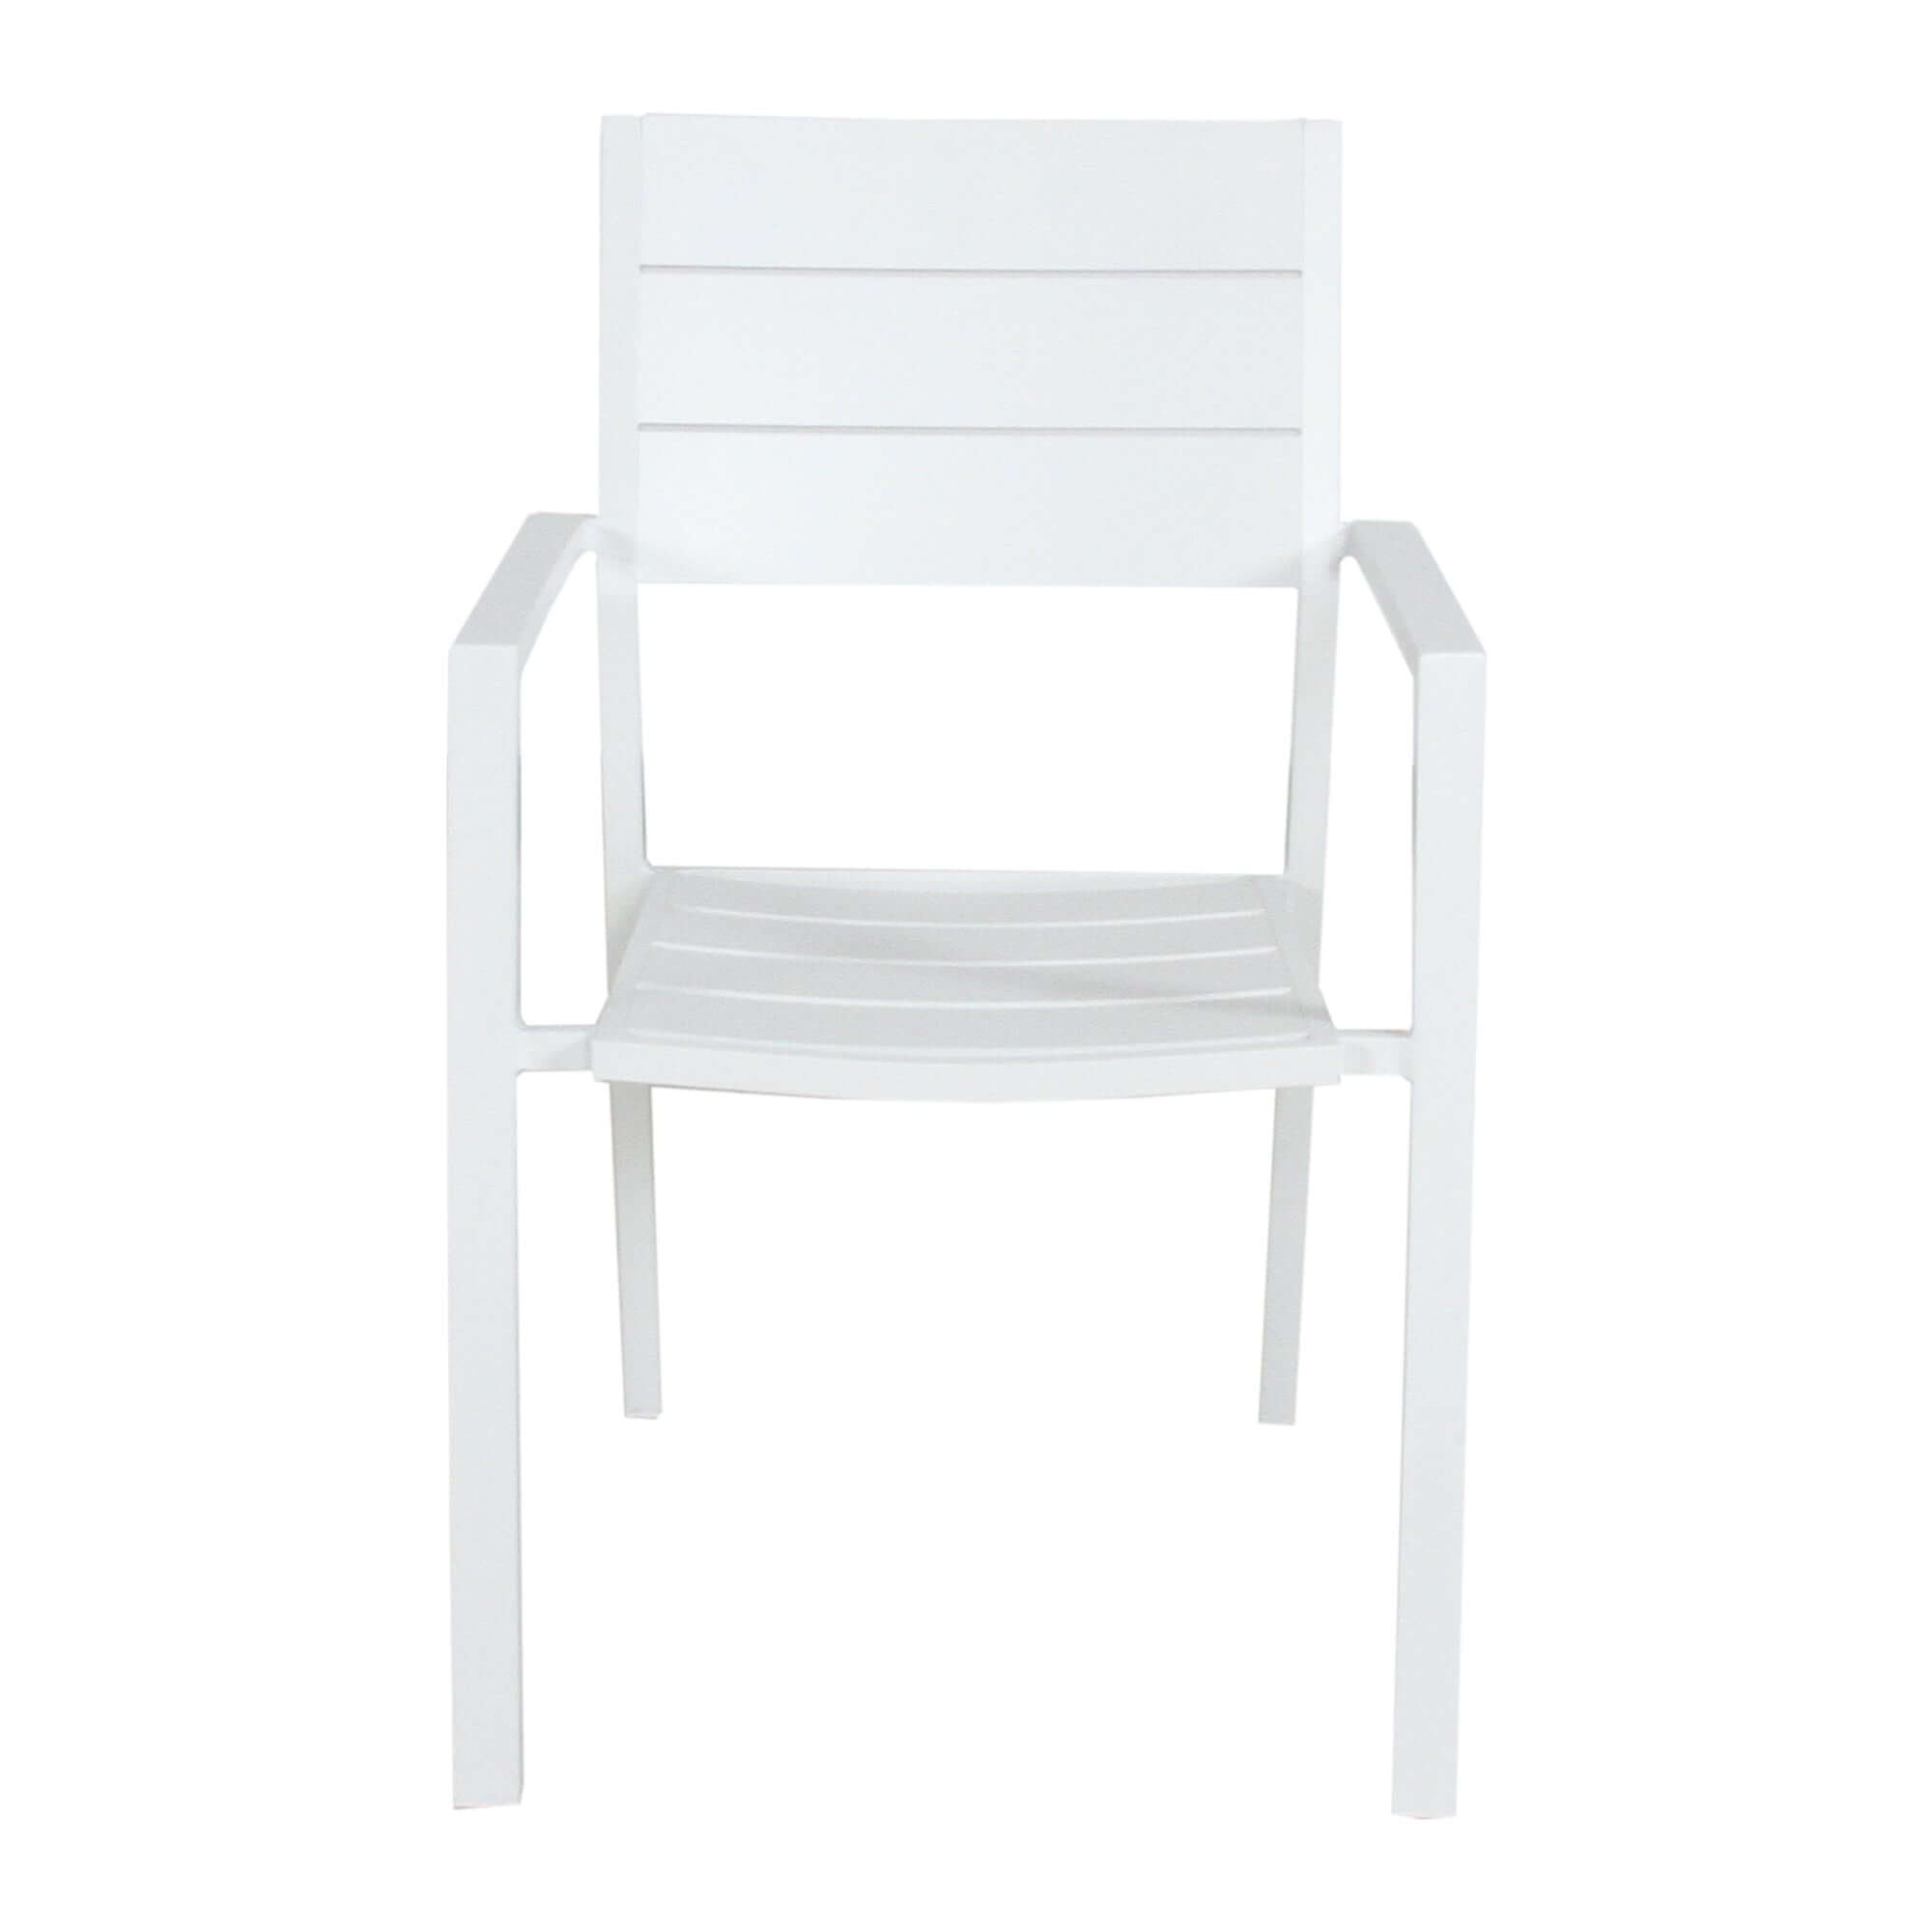 Percy 6pc Outdoor Dining Set | Aluminium White Chairs-Upinteriors